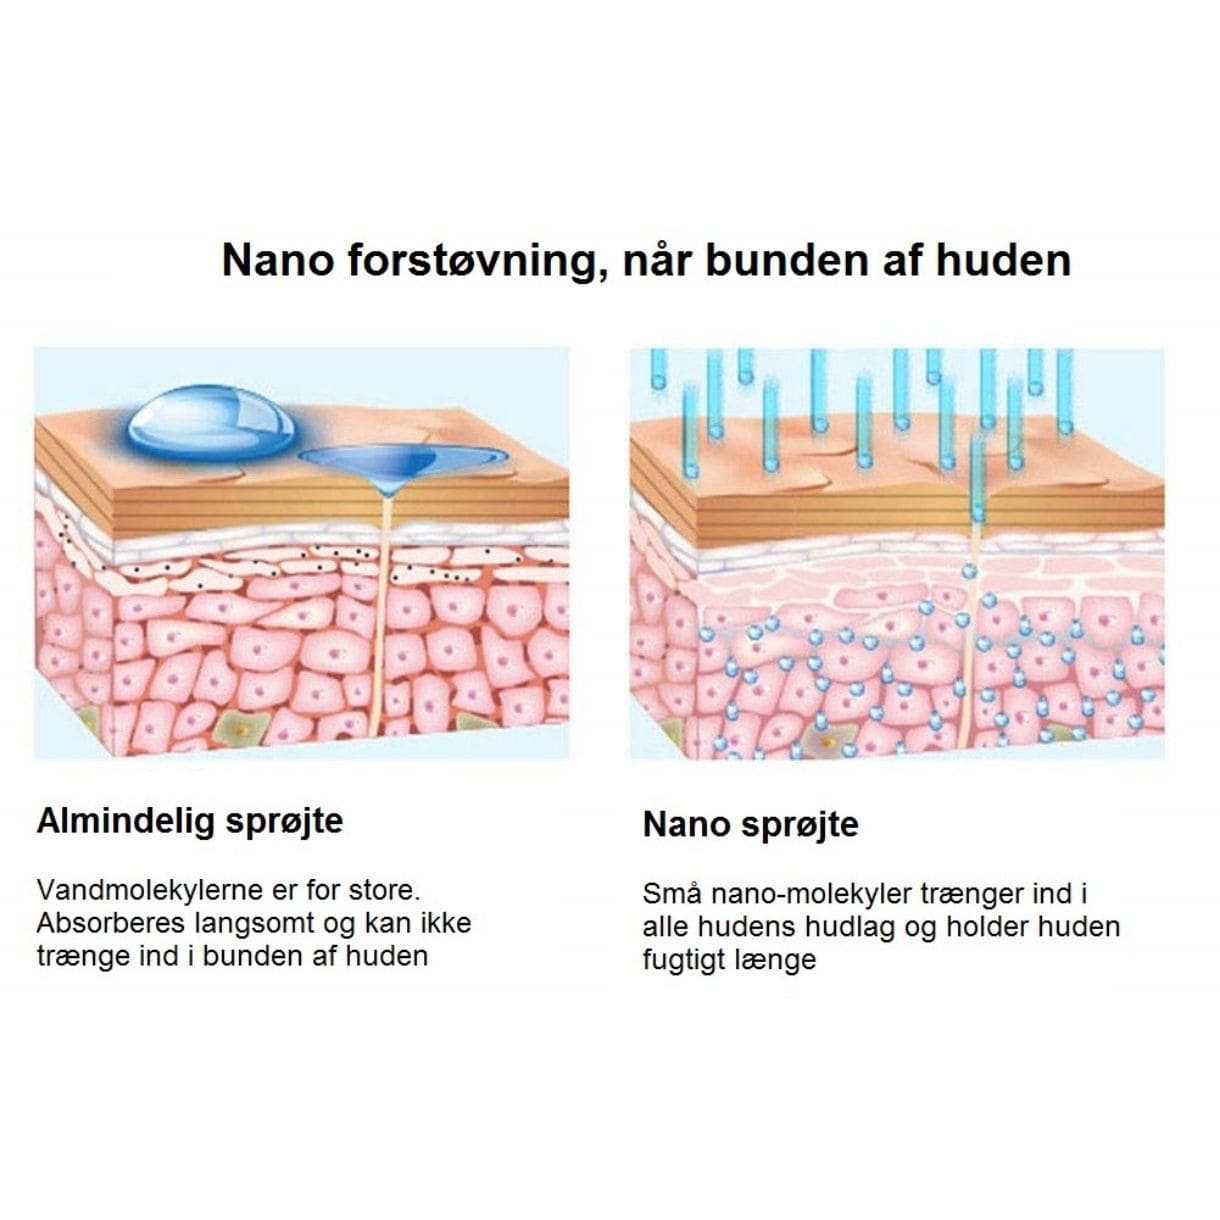 Nano forstøvning